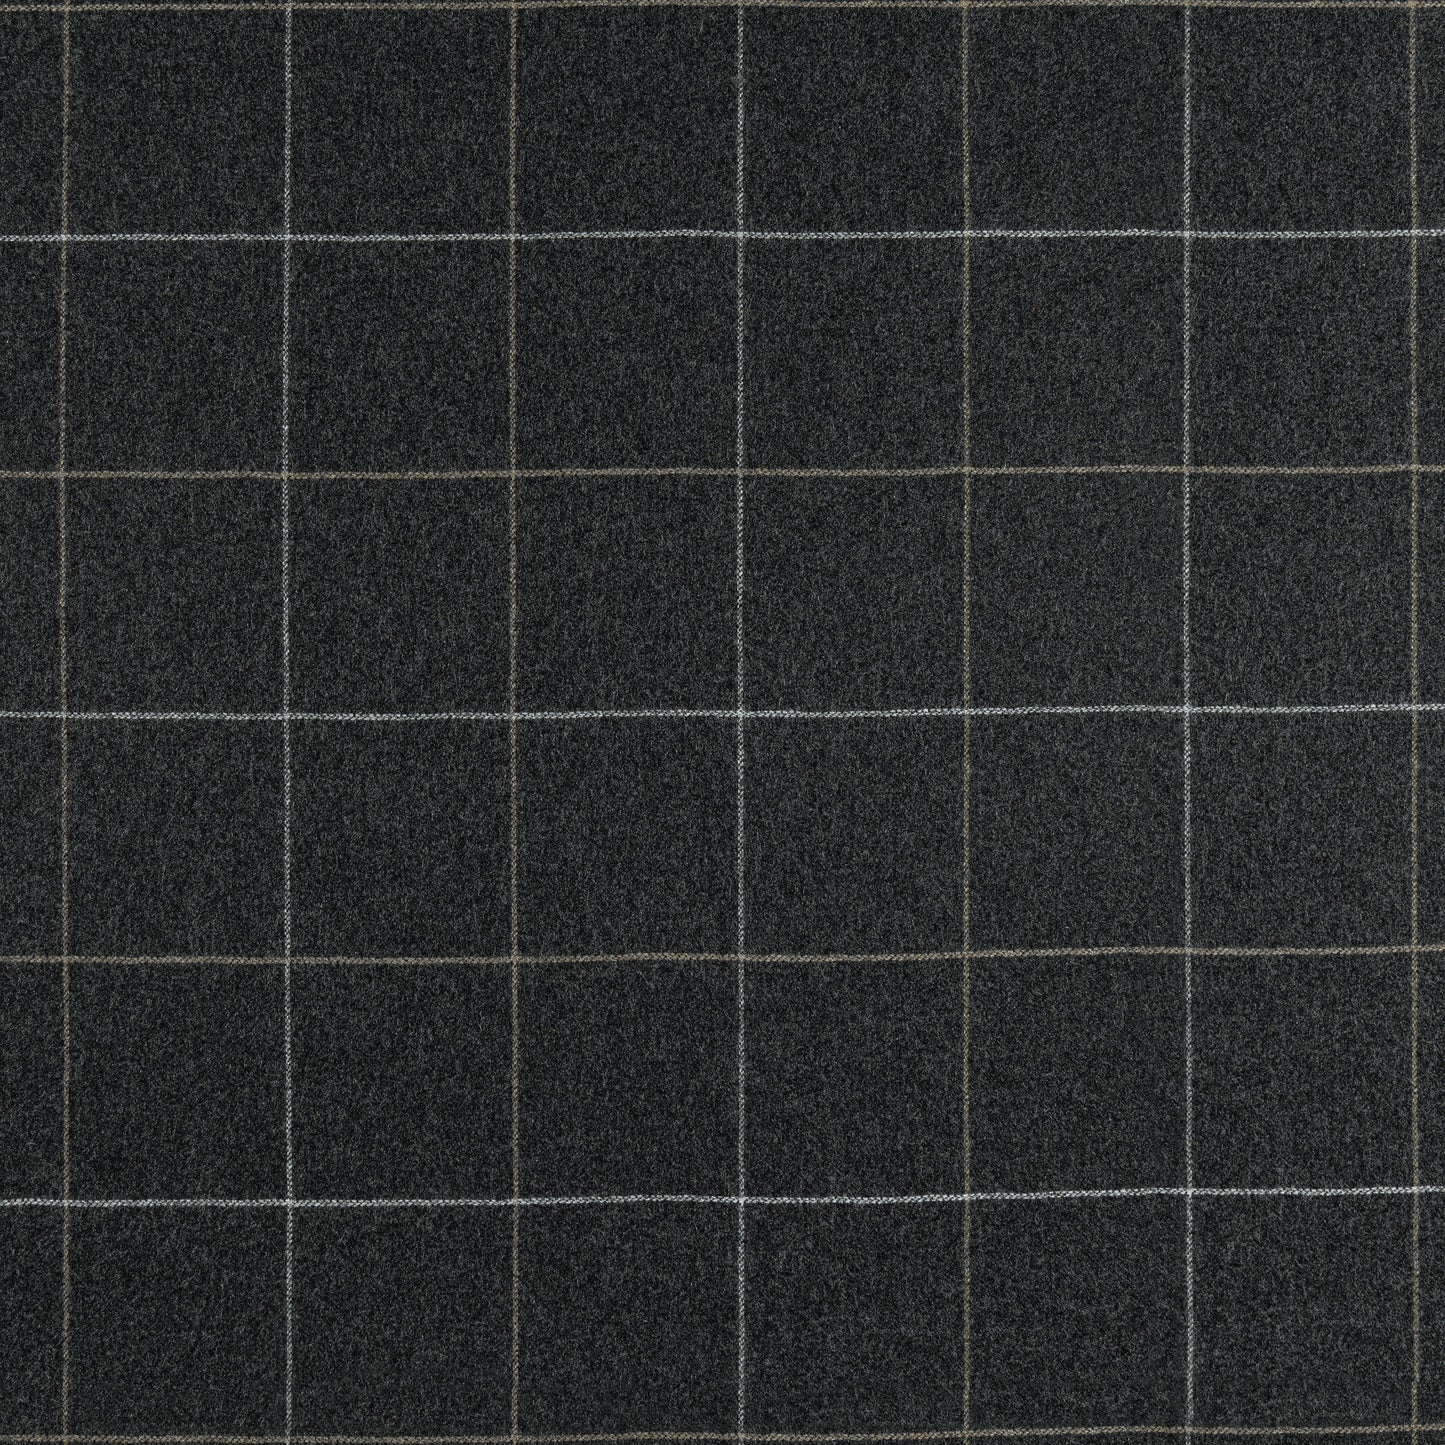 Purchase Thibaut Fabric SKU W8103 pattern name Ravello color Black